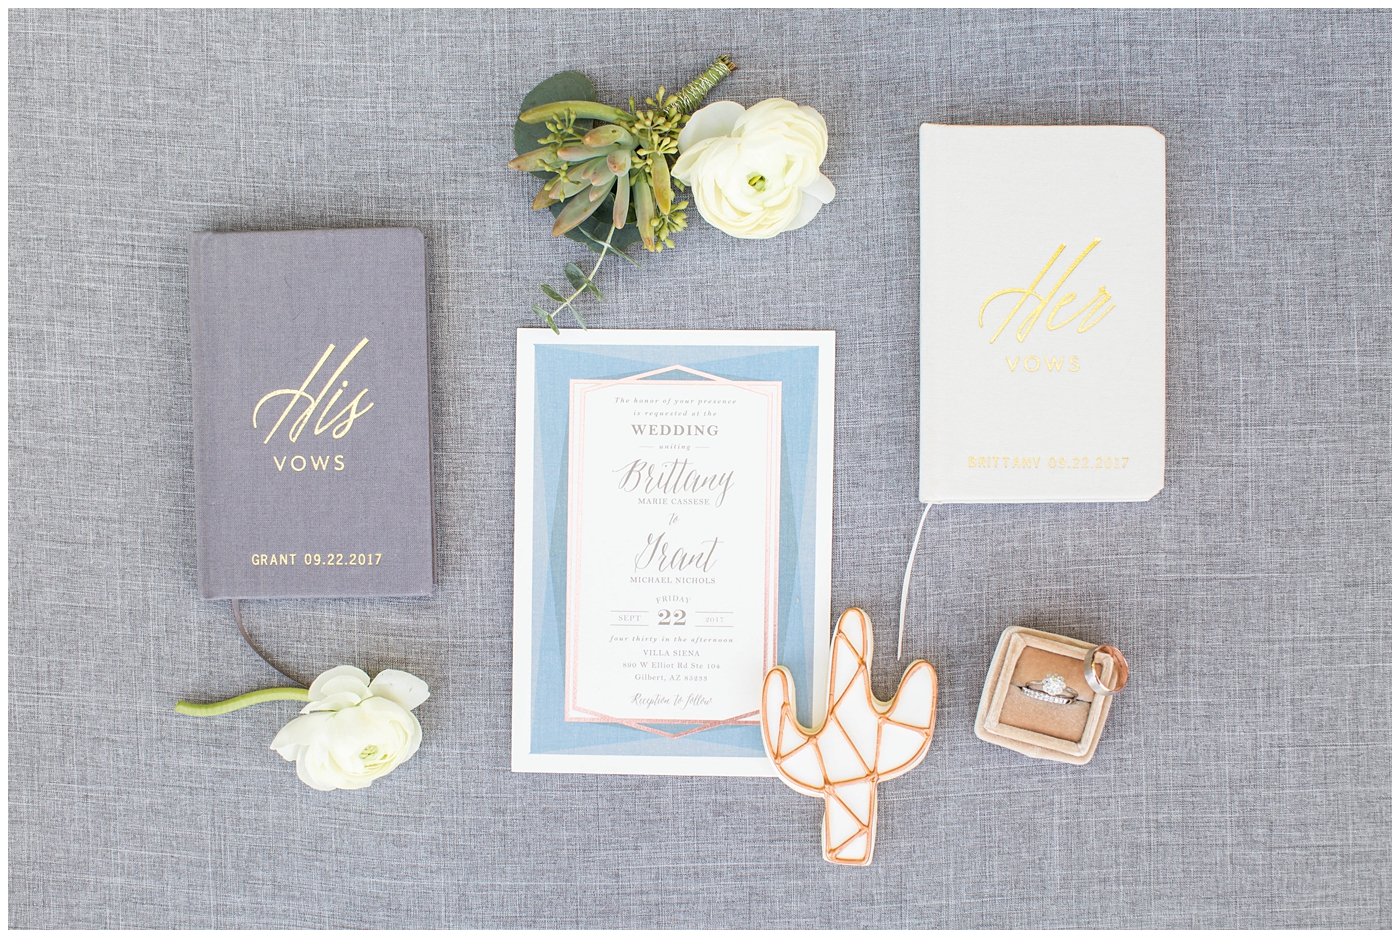 Wedding invitation suite with details